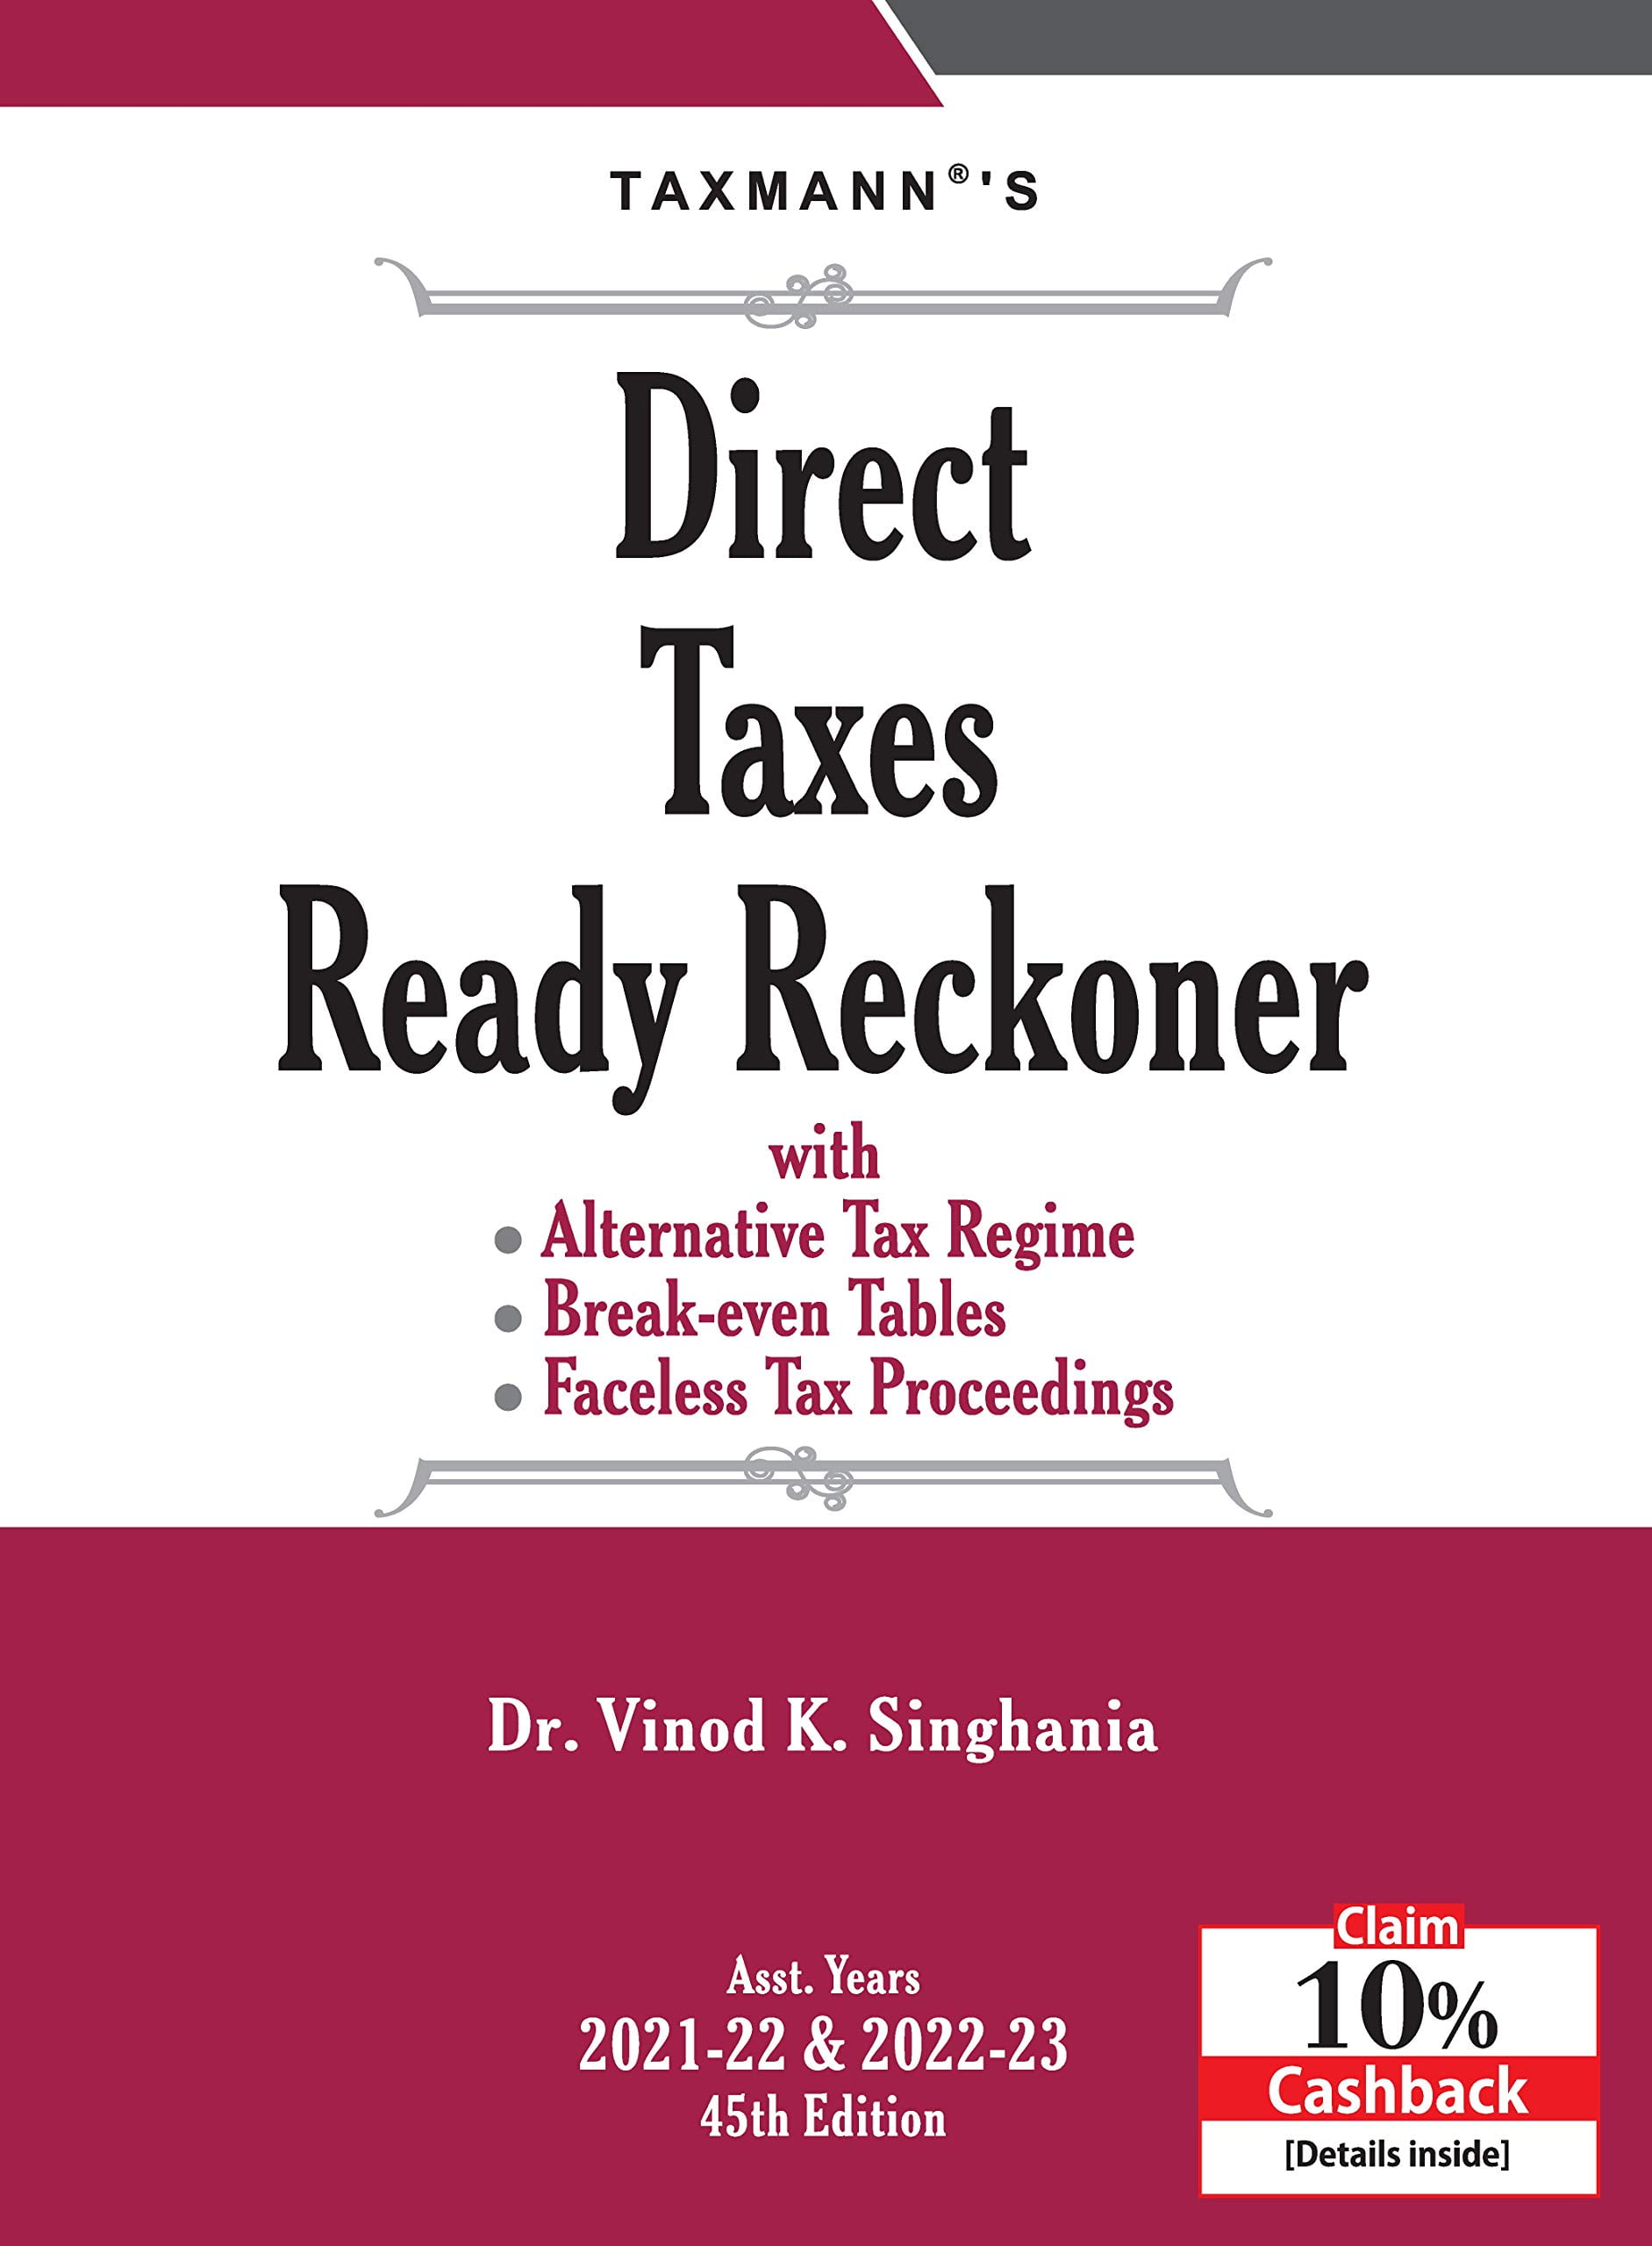 Taxmann’s Direct Taxes Ready Reckoner